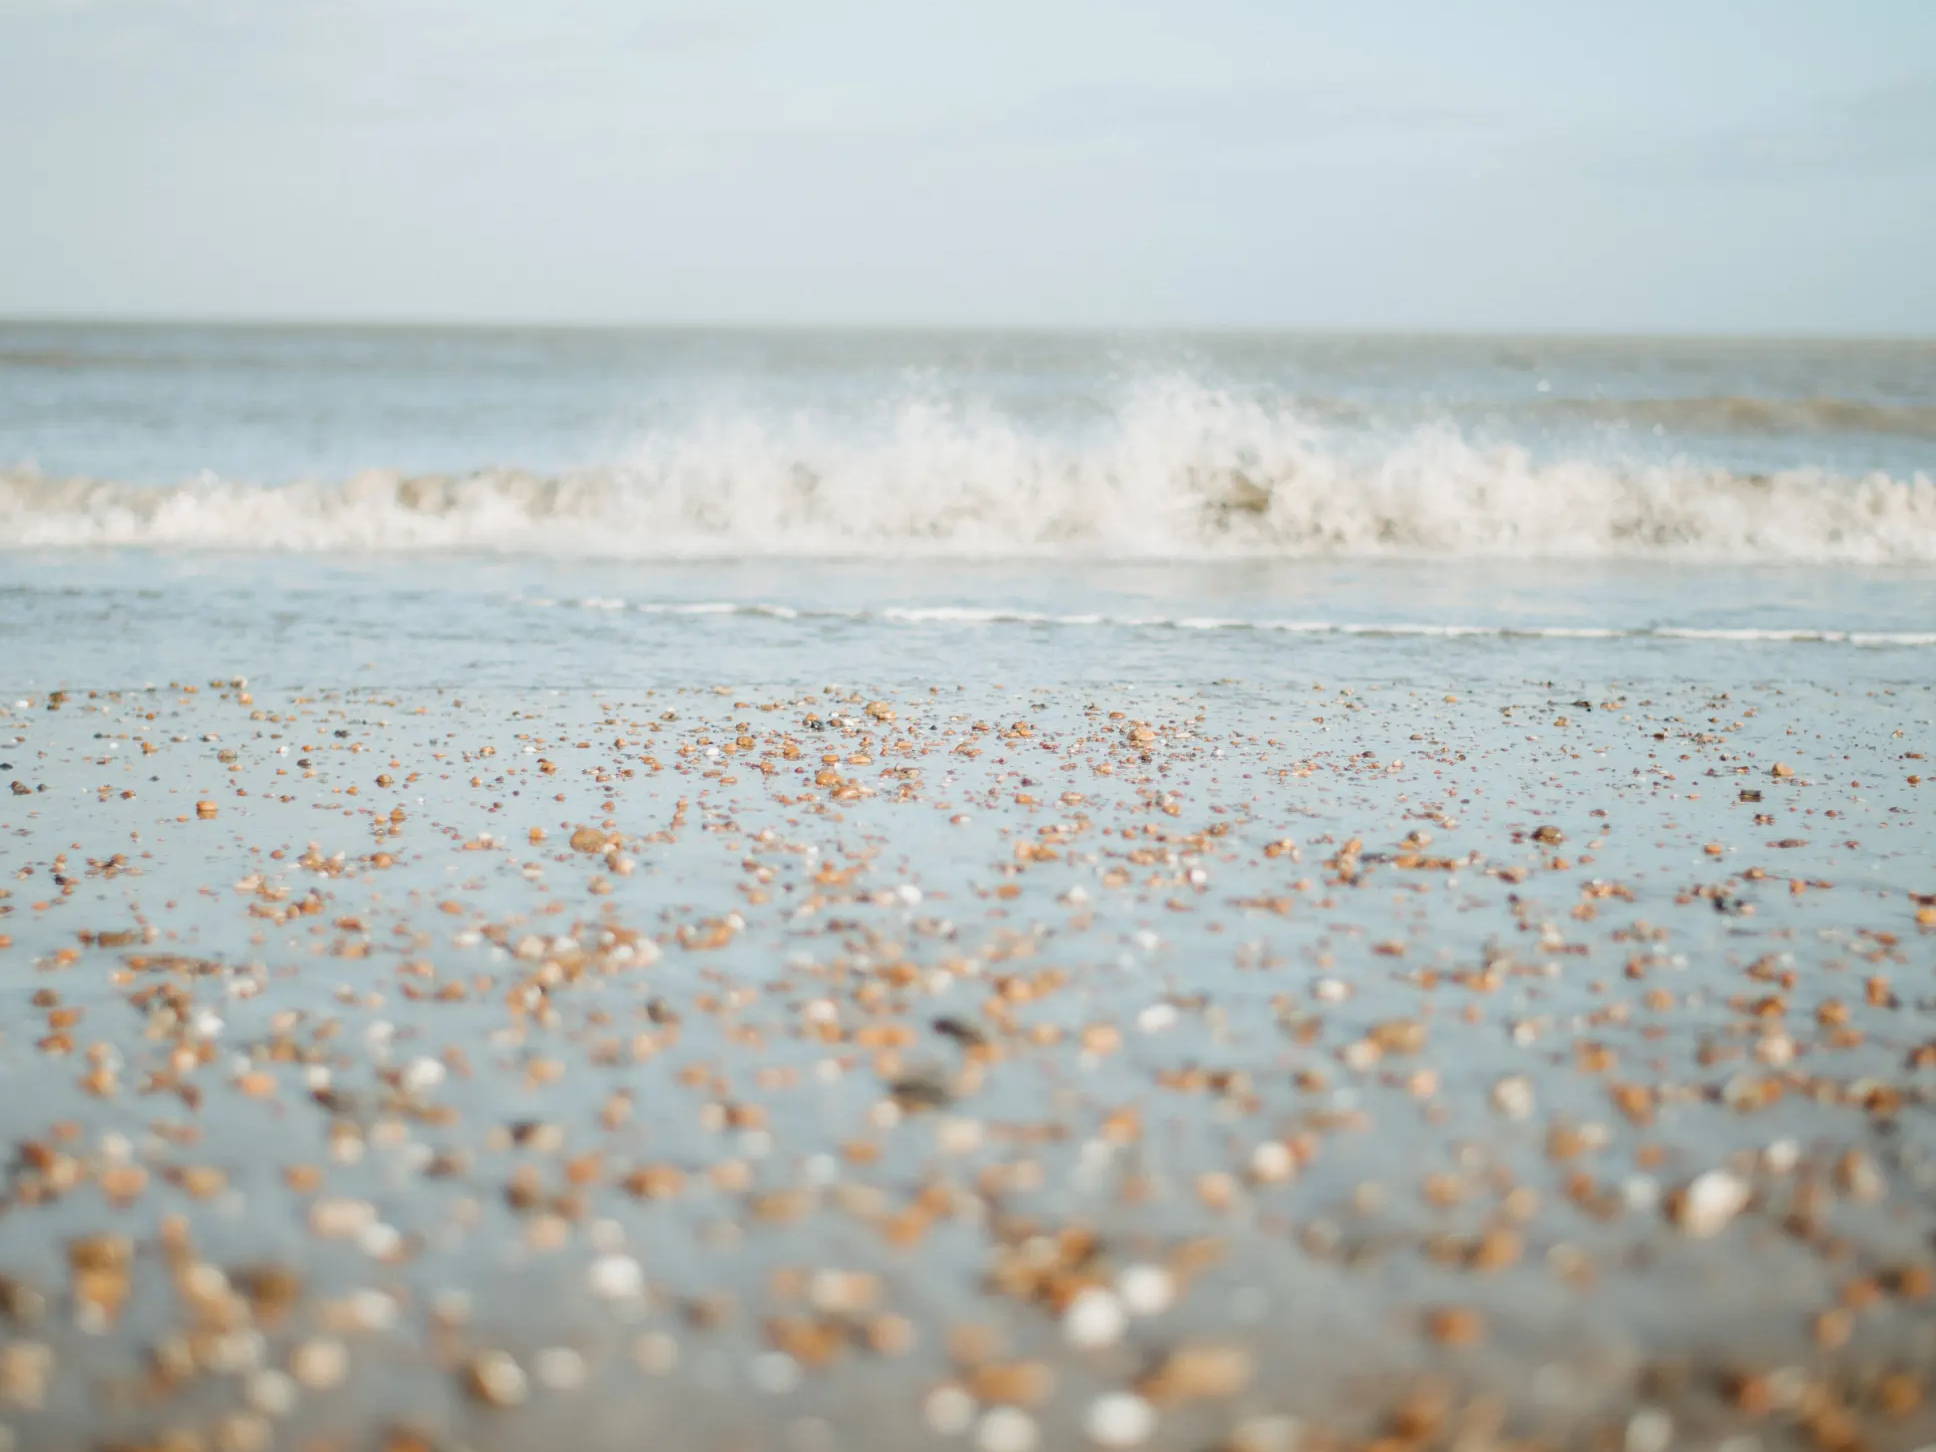 Pebbles and seashells on the shore as waves crash